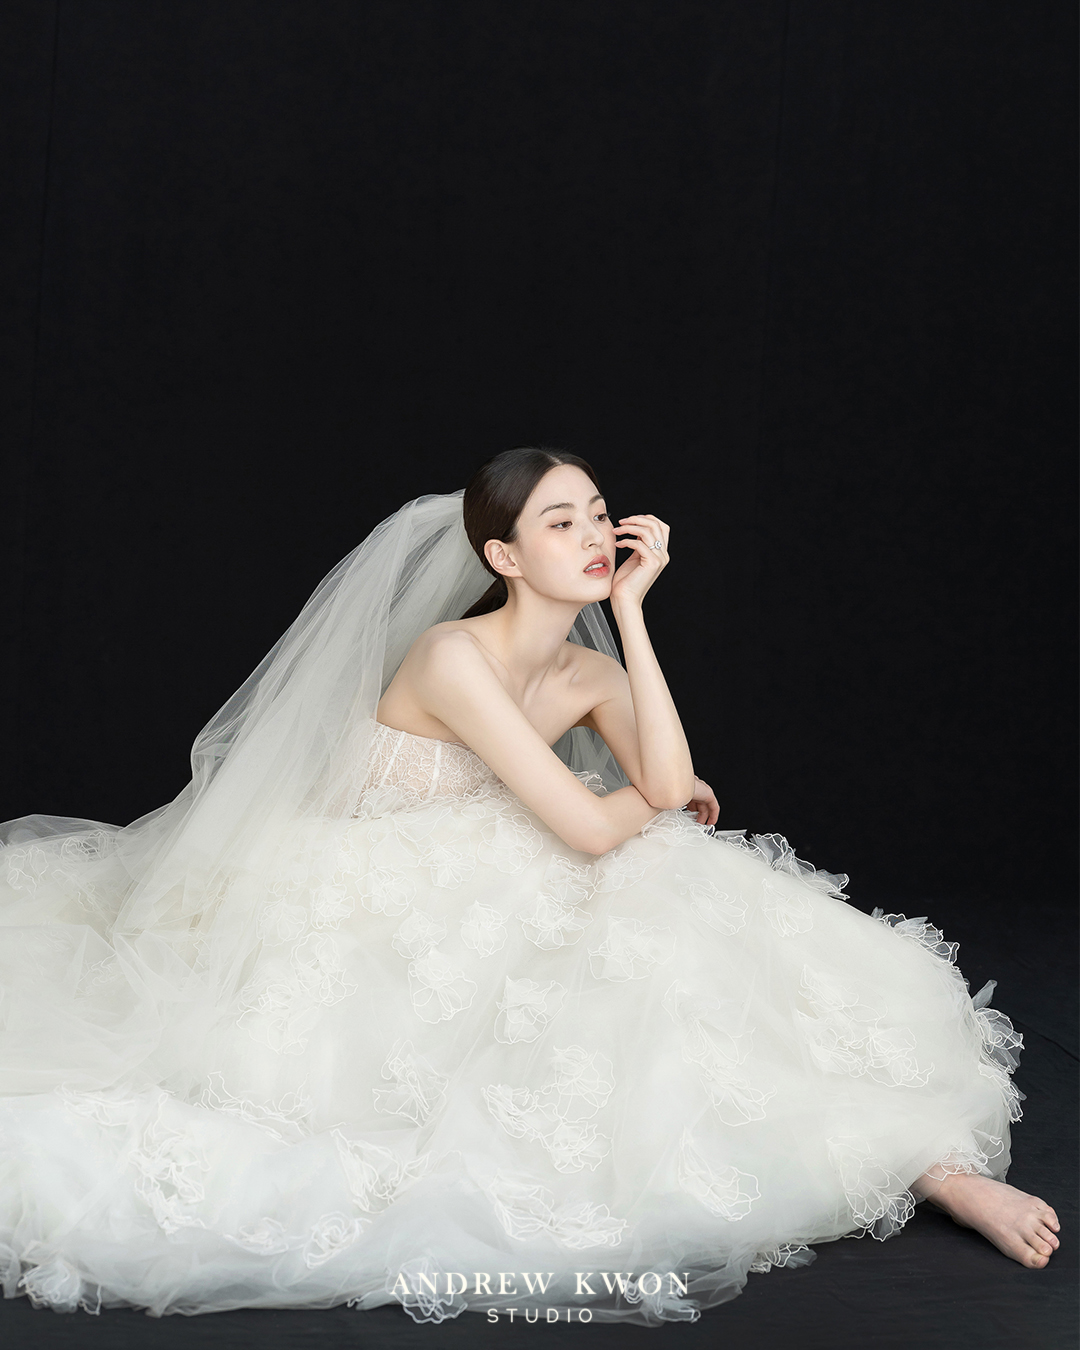 KOREAN WEDDING ANDREW KWON STUDIO : korea wedding pledge